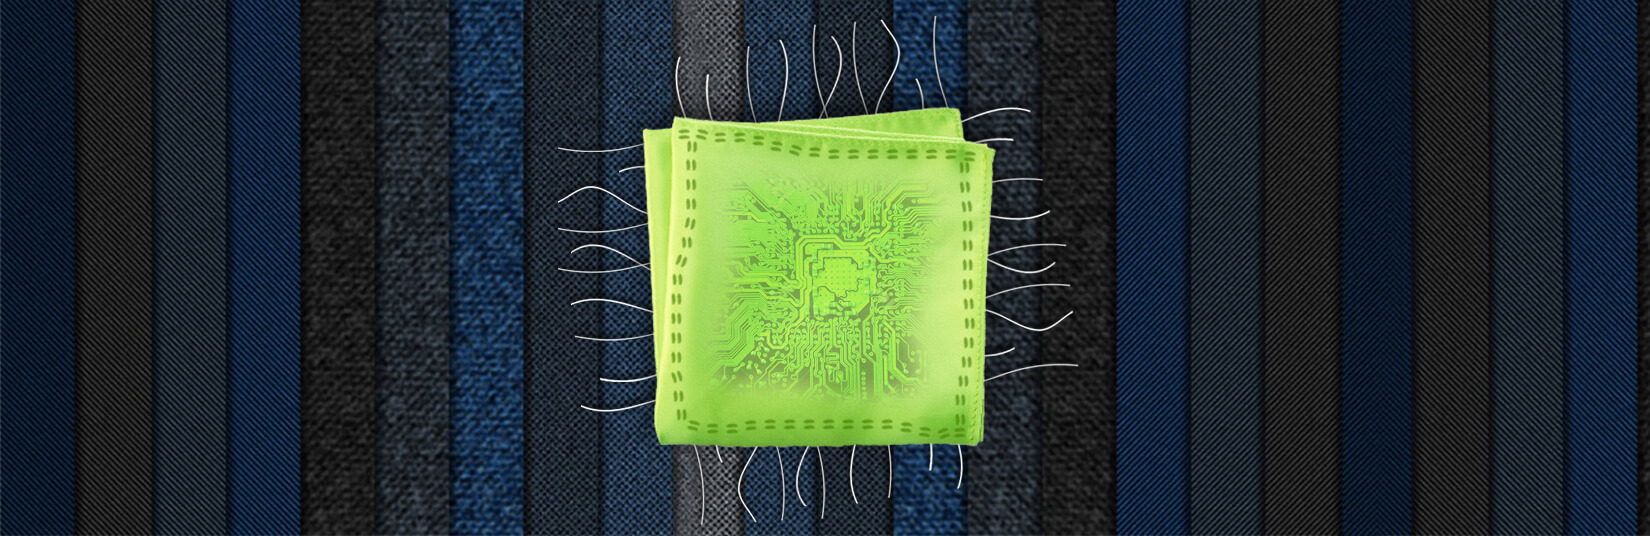 smart-fabrics_green-hard-light-35